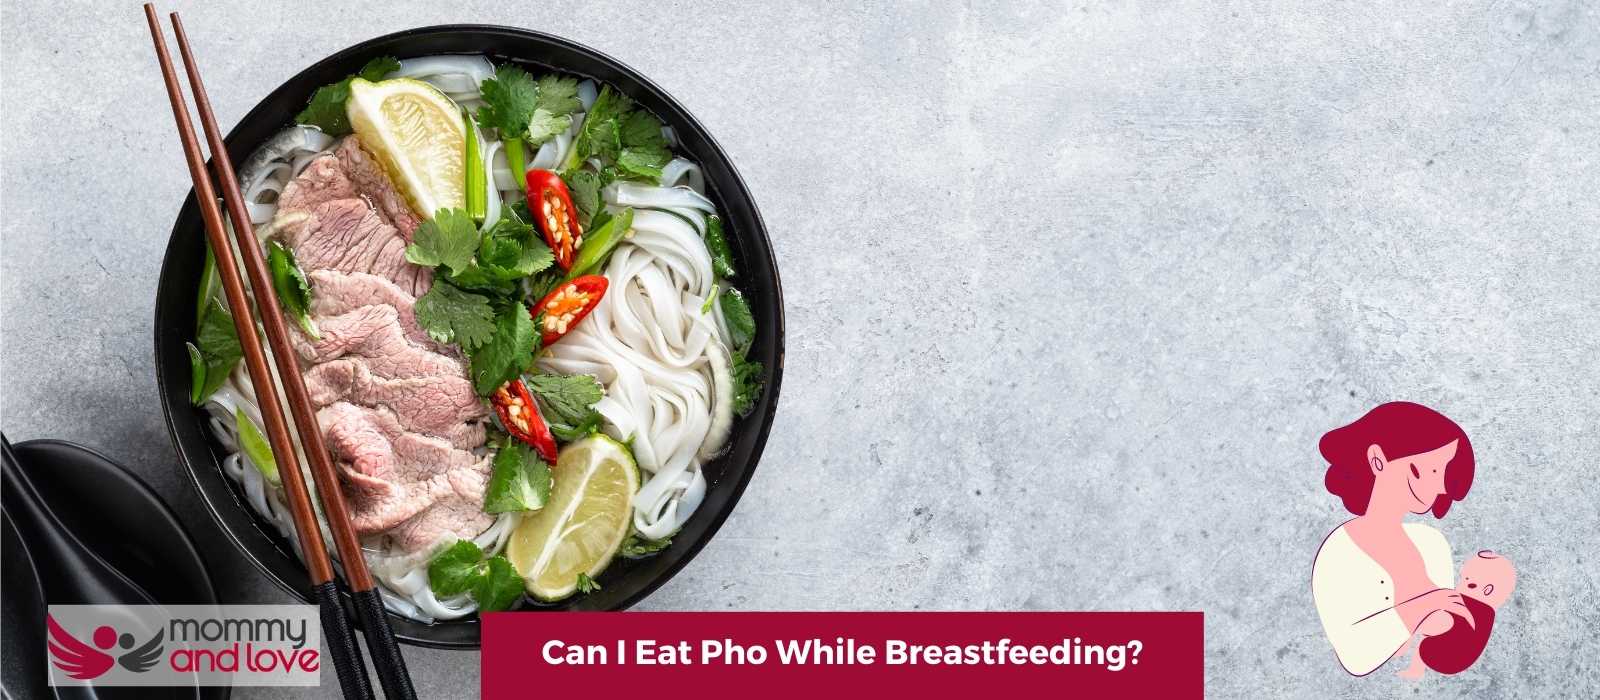 Can I Eat Pho While Breastfeeding?